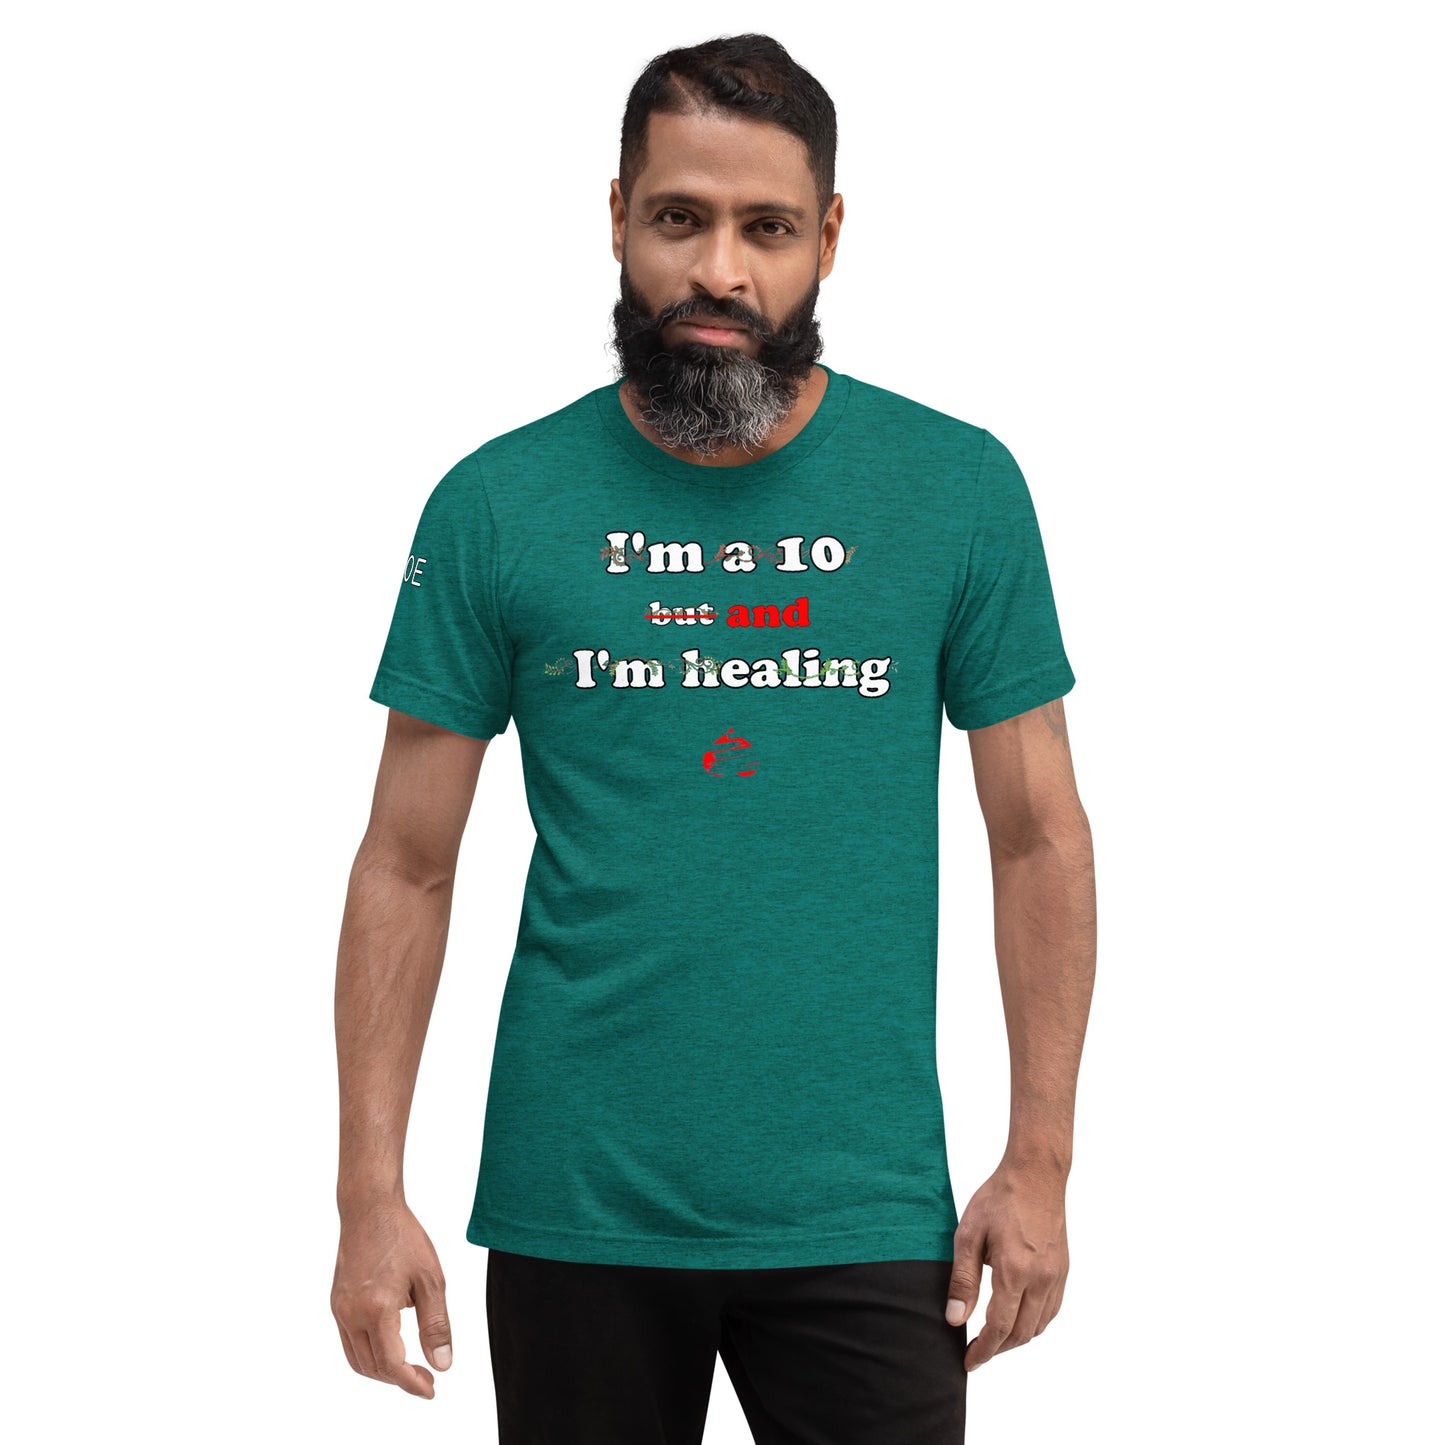 I'm a 10 and I'm Healing: Short sleeve Triblend t-shirt